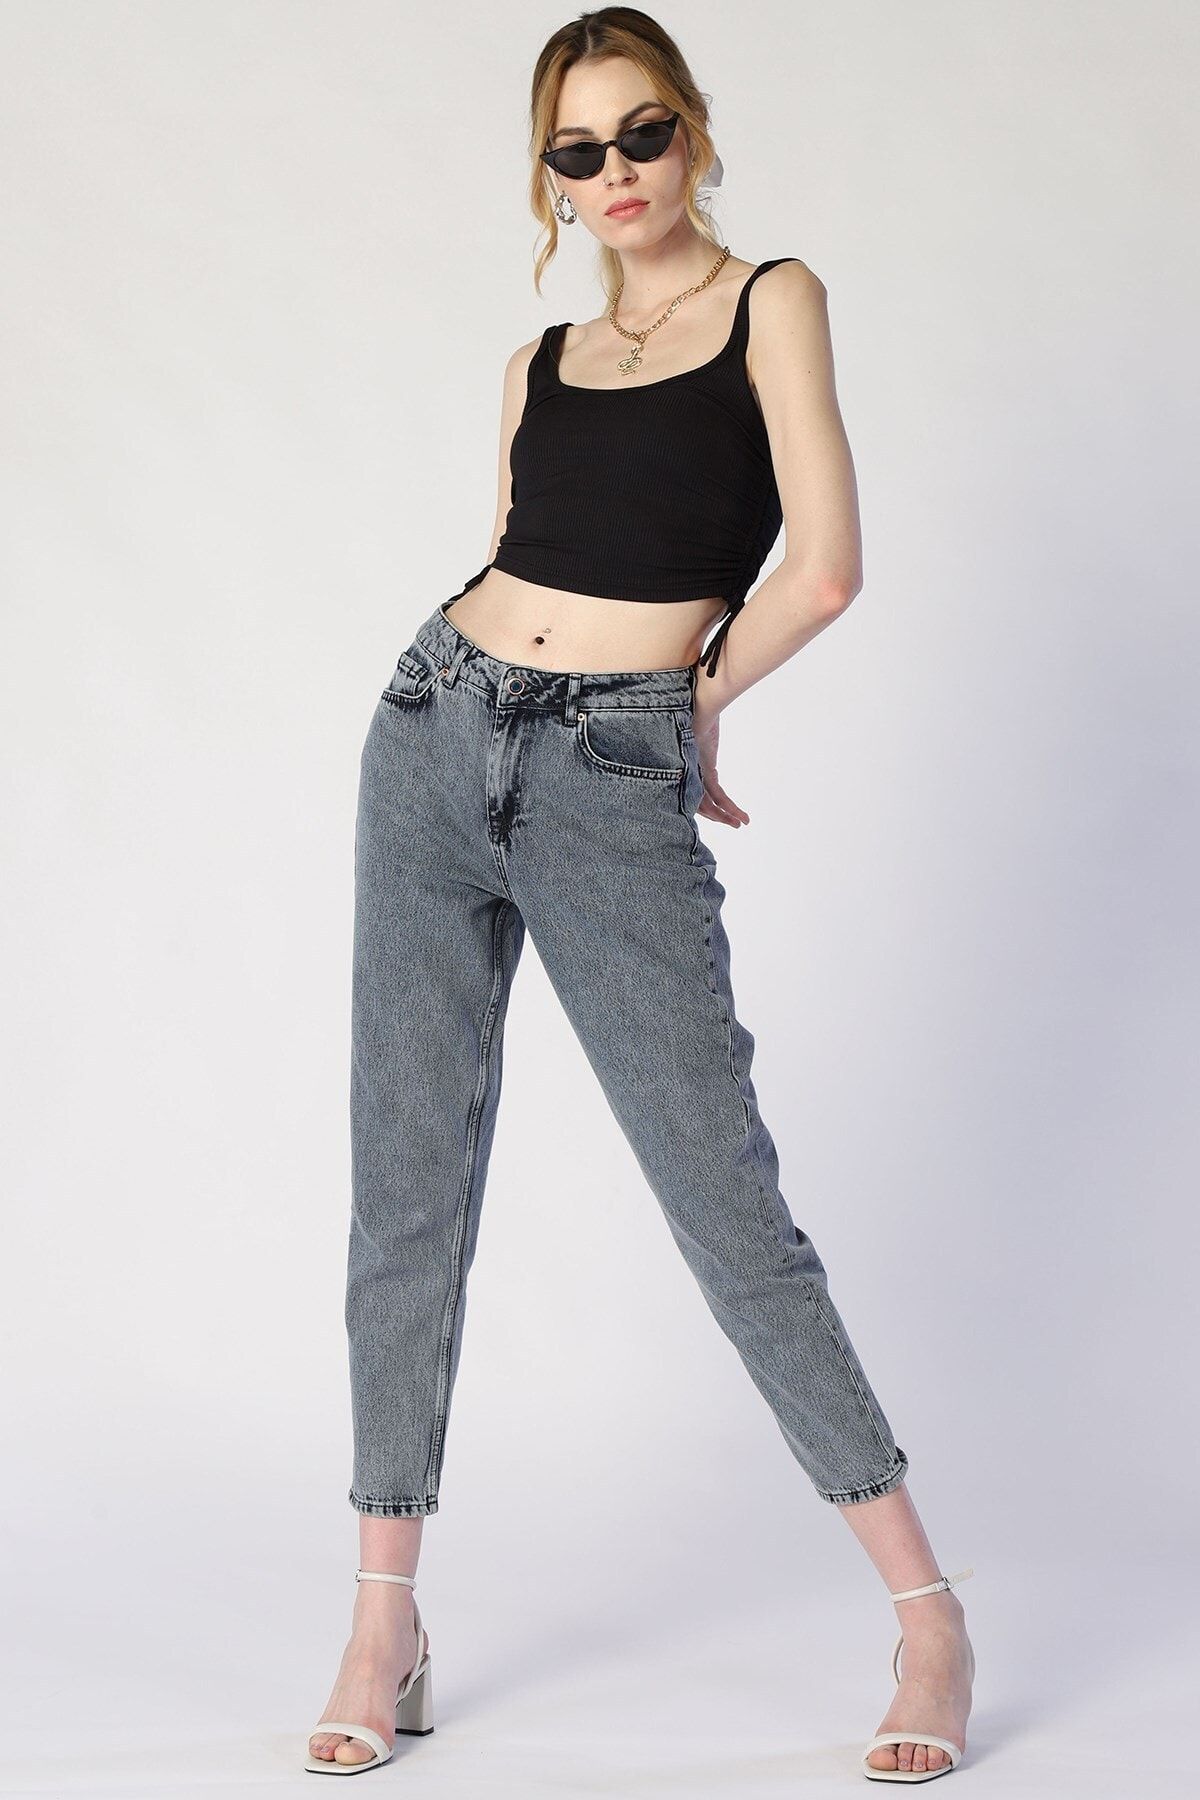 Twister Jeans kadın  Mom Fit Yüksek Bel Pantolon Sandy 9328-10 Gri